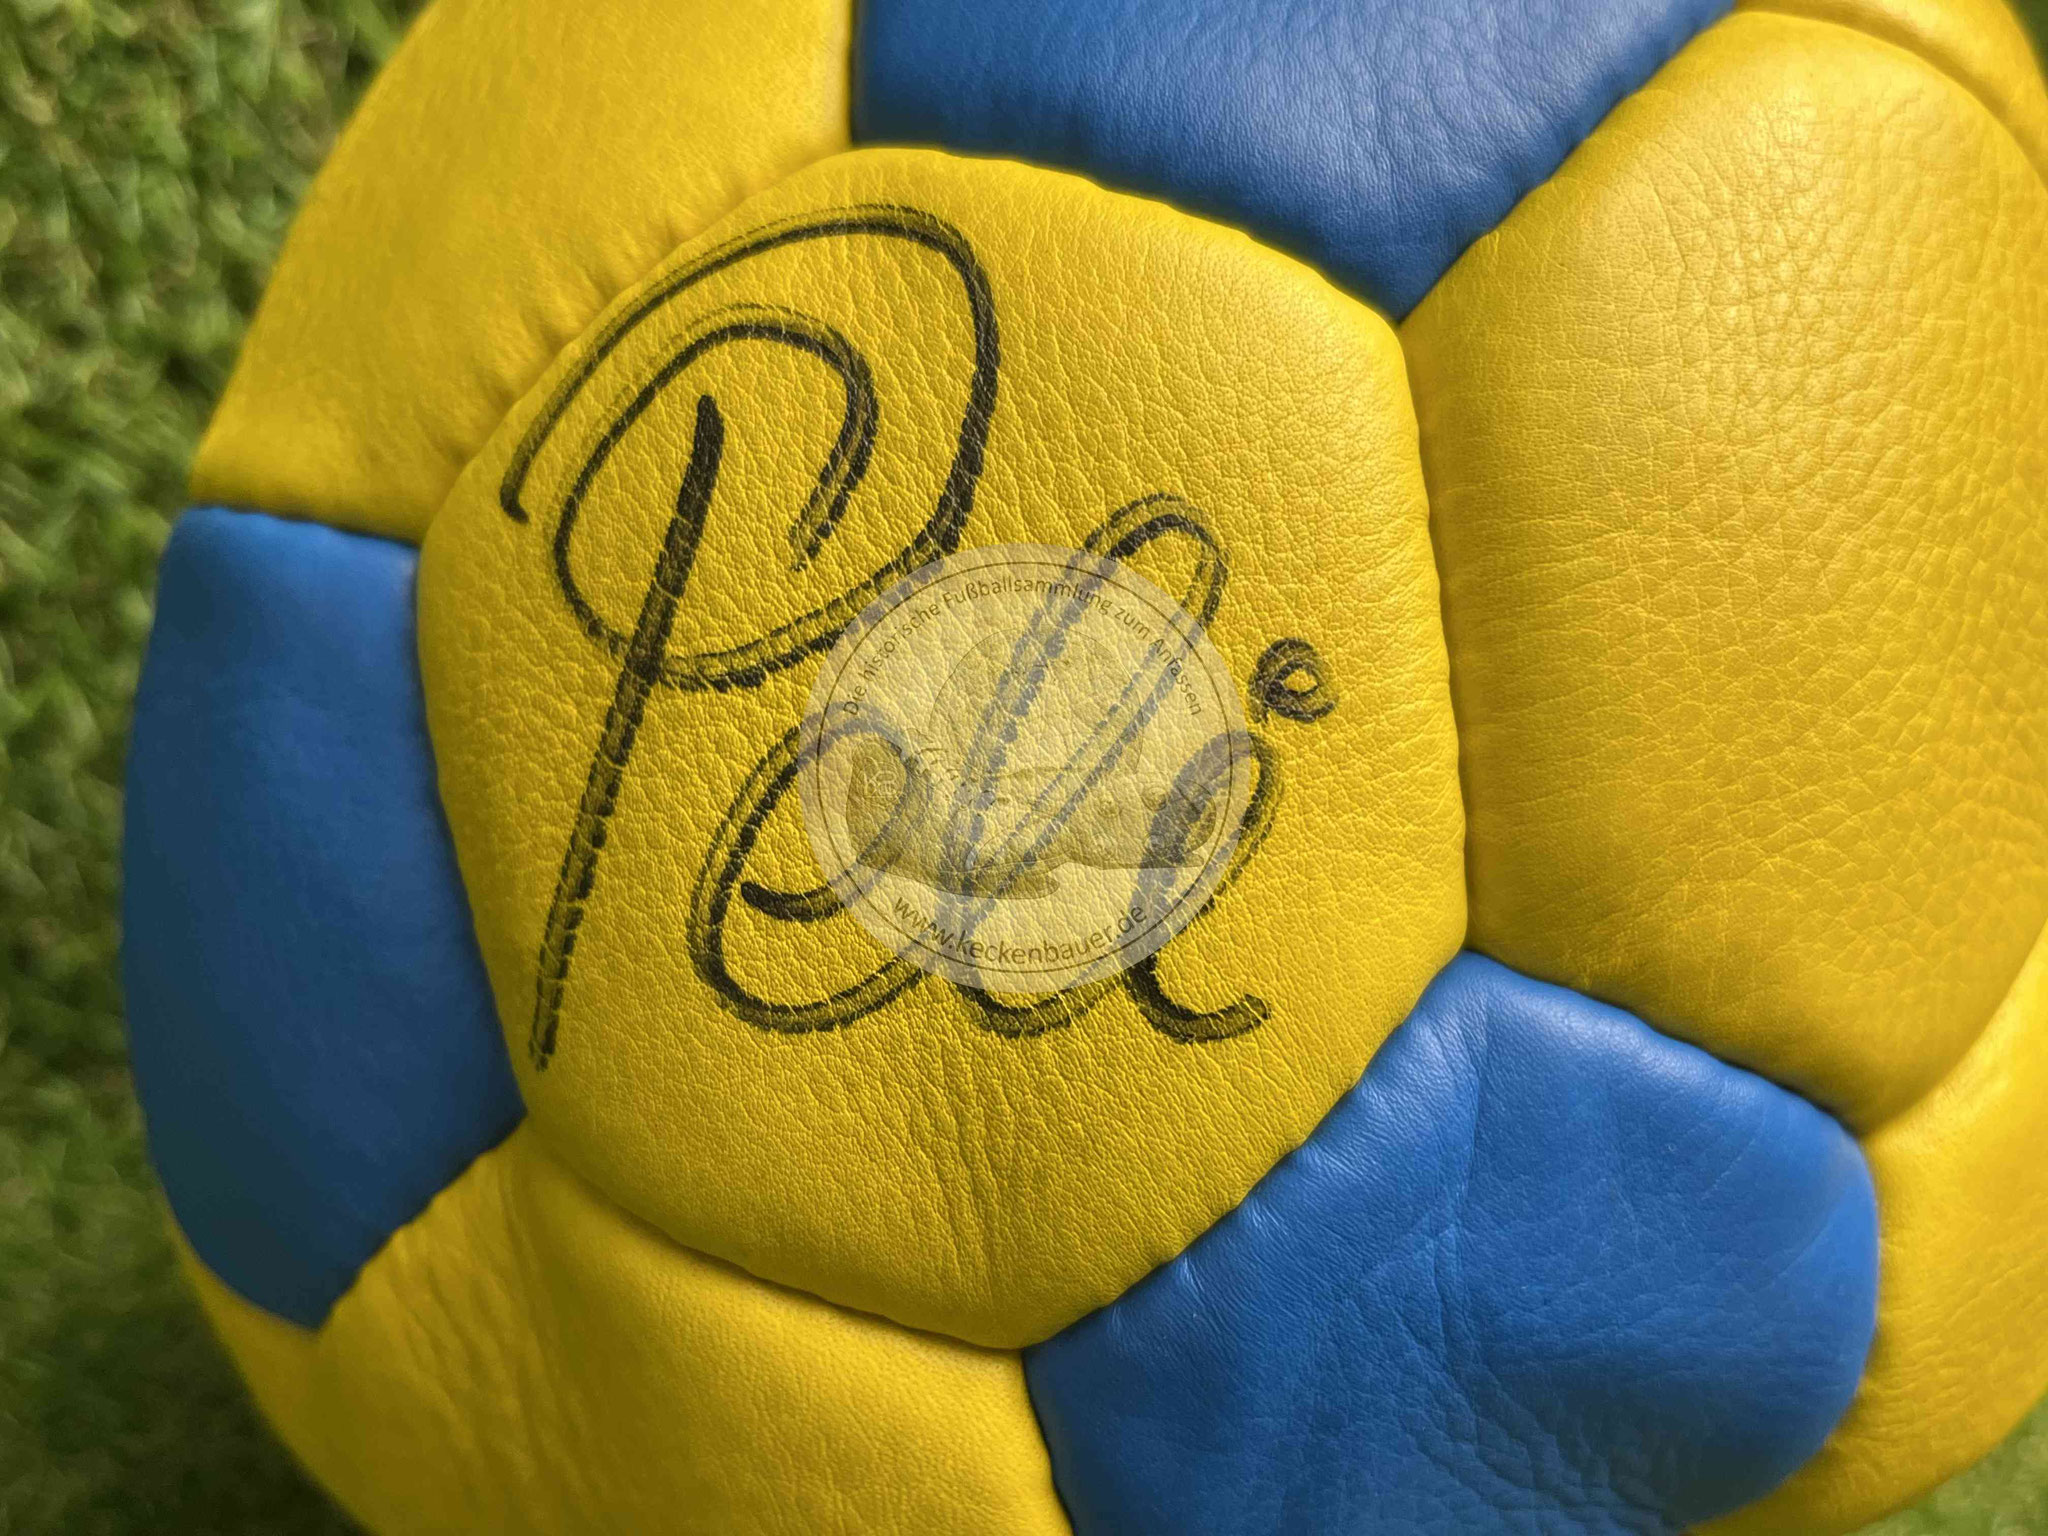 Puma Ball Gelb Blau mit Pele Autogramm 